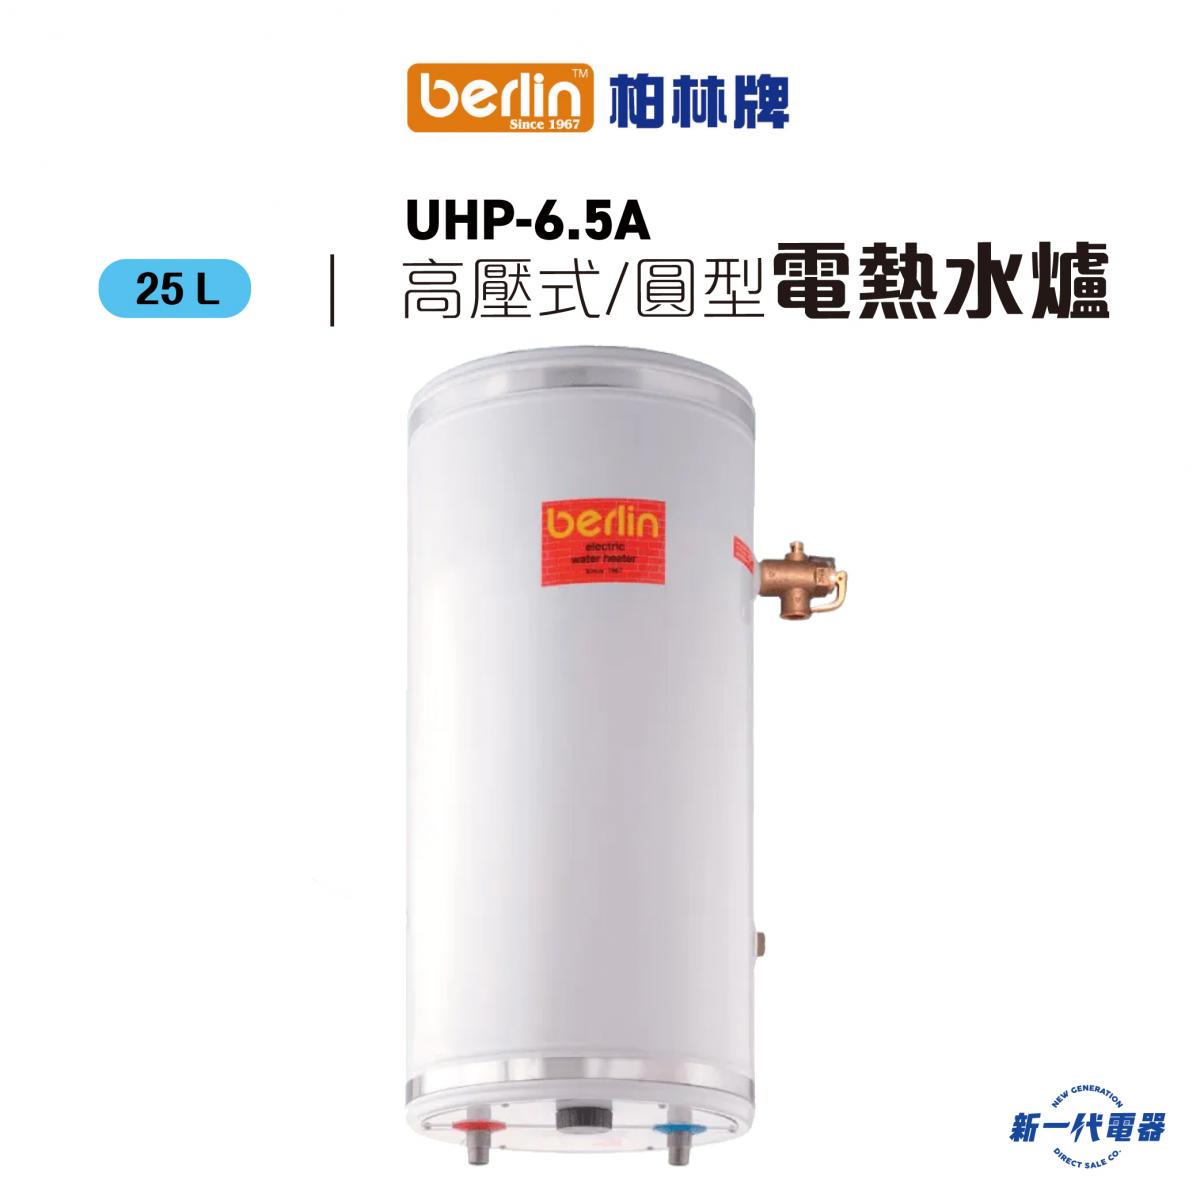 UHP6.5A圓型  -25公升 中央高壓儲水式電熱水爐 圓型直掛牆  (UHP-6.5A)